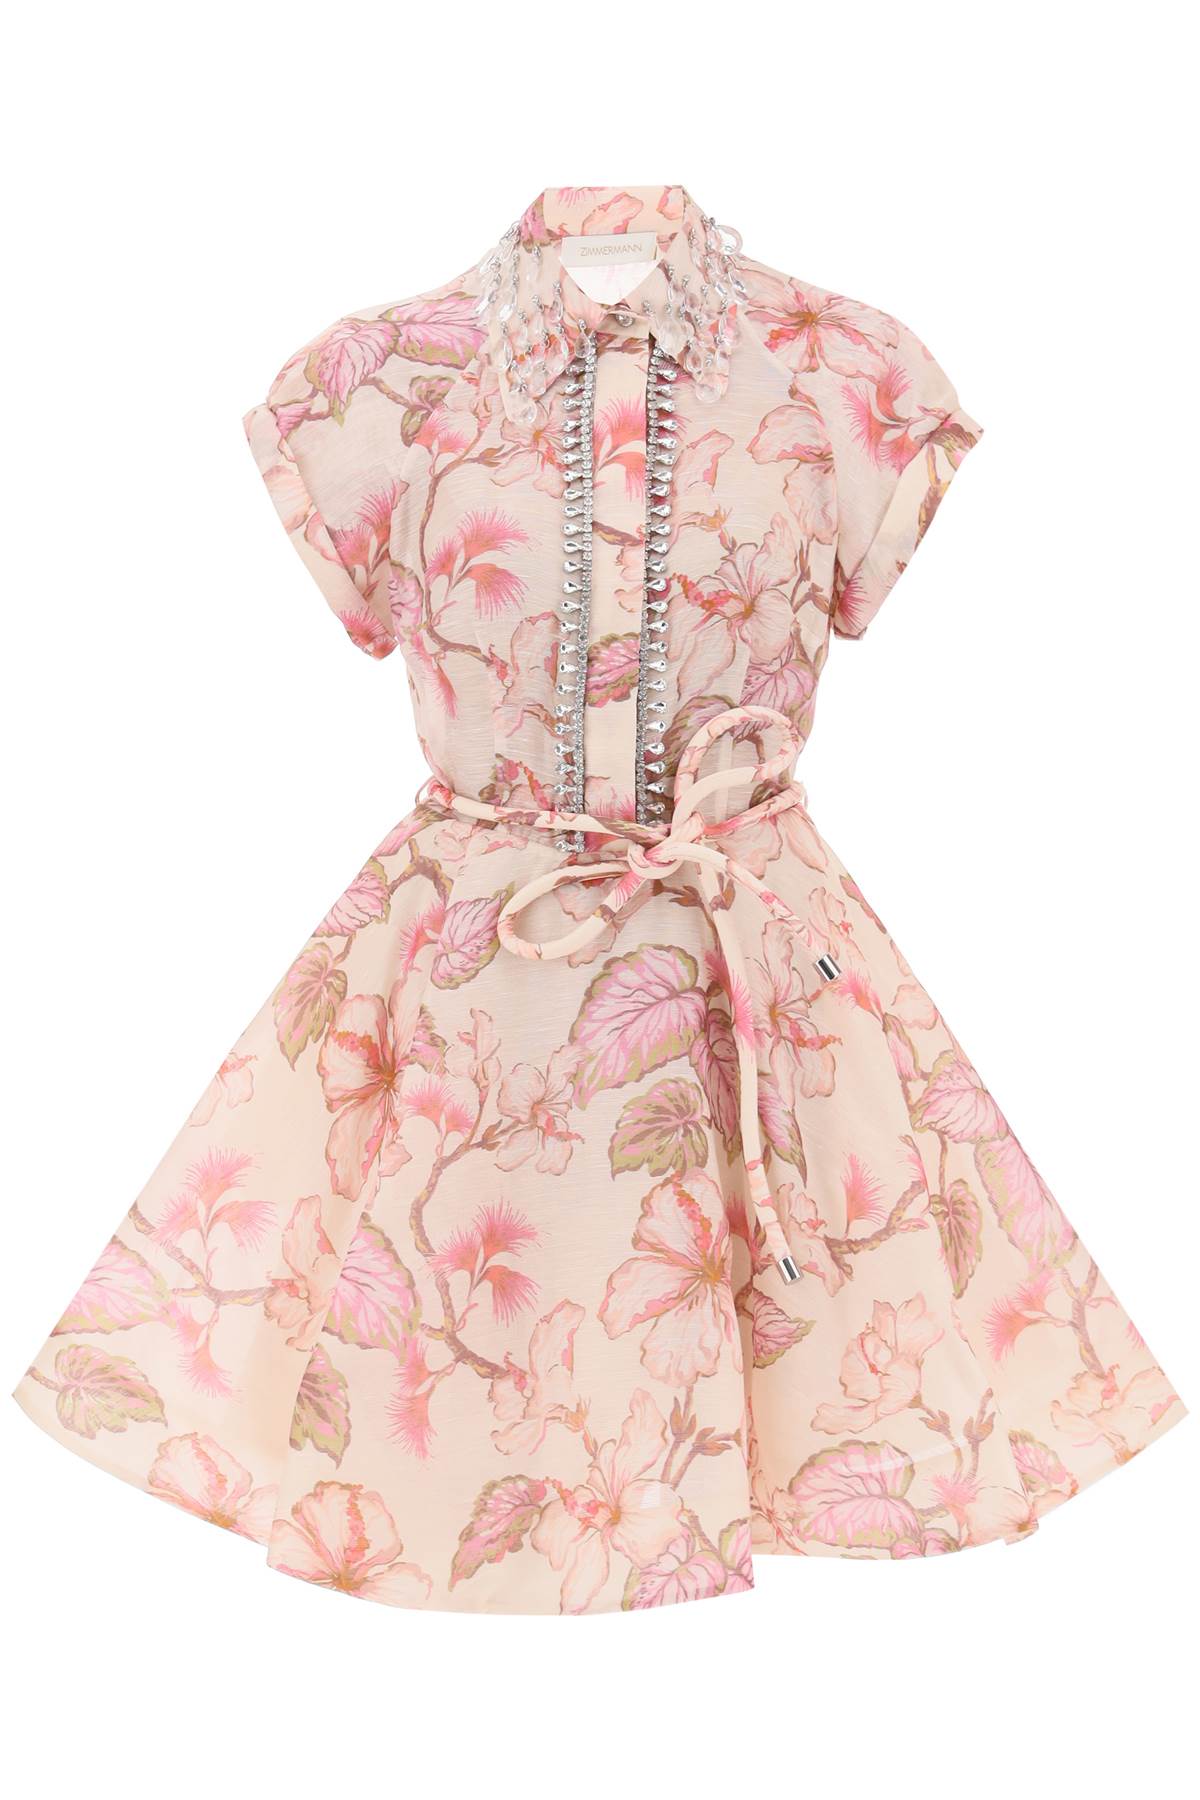 Matchmaker Flip Floral Dress With Appliqués - Pink